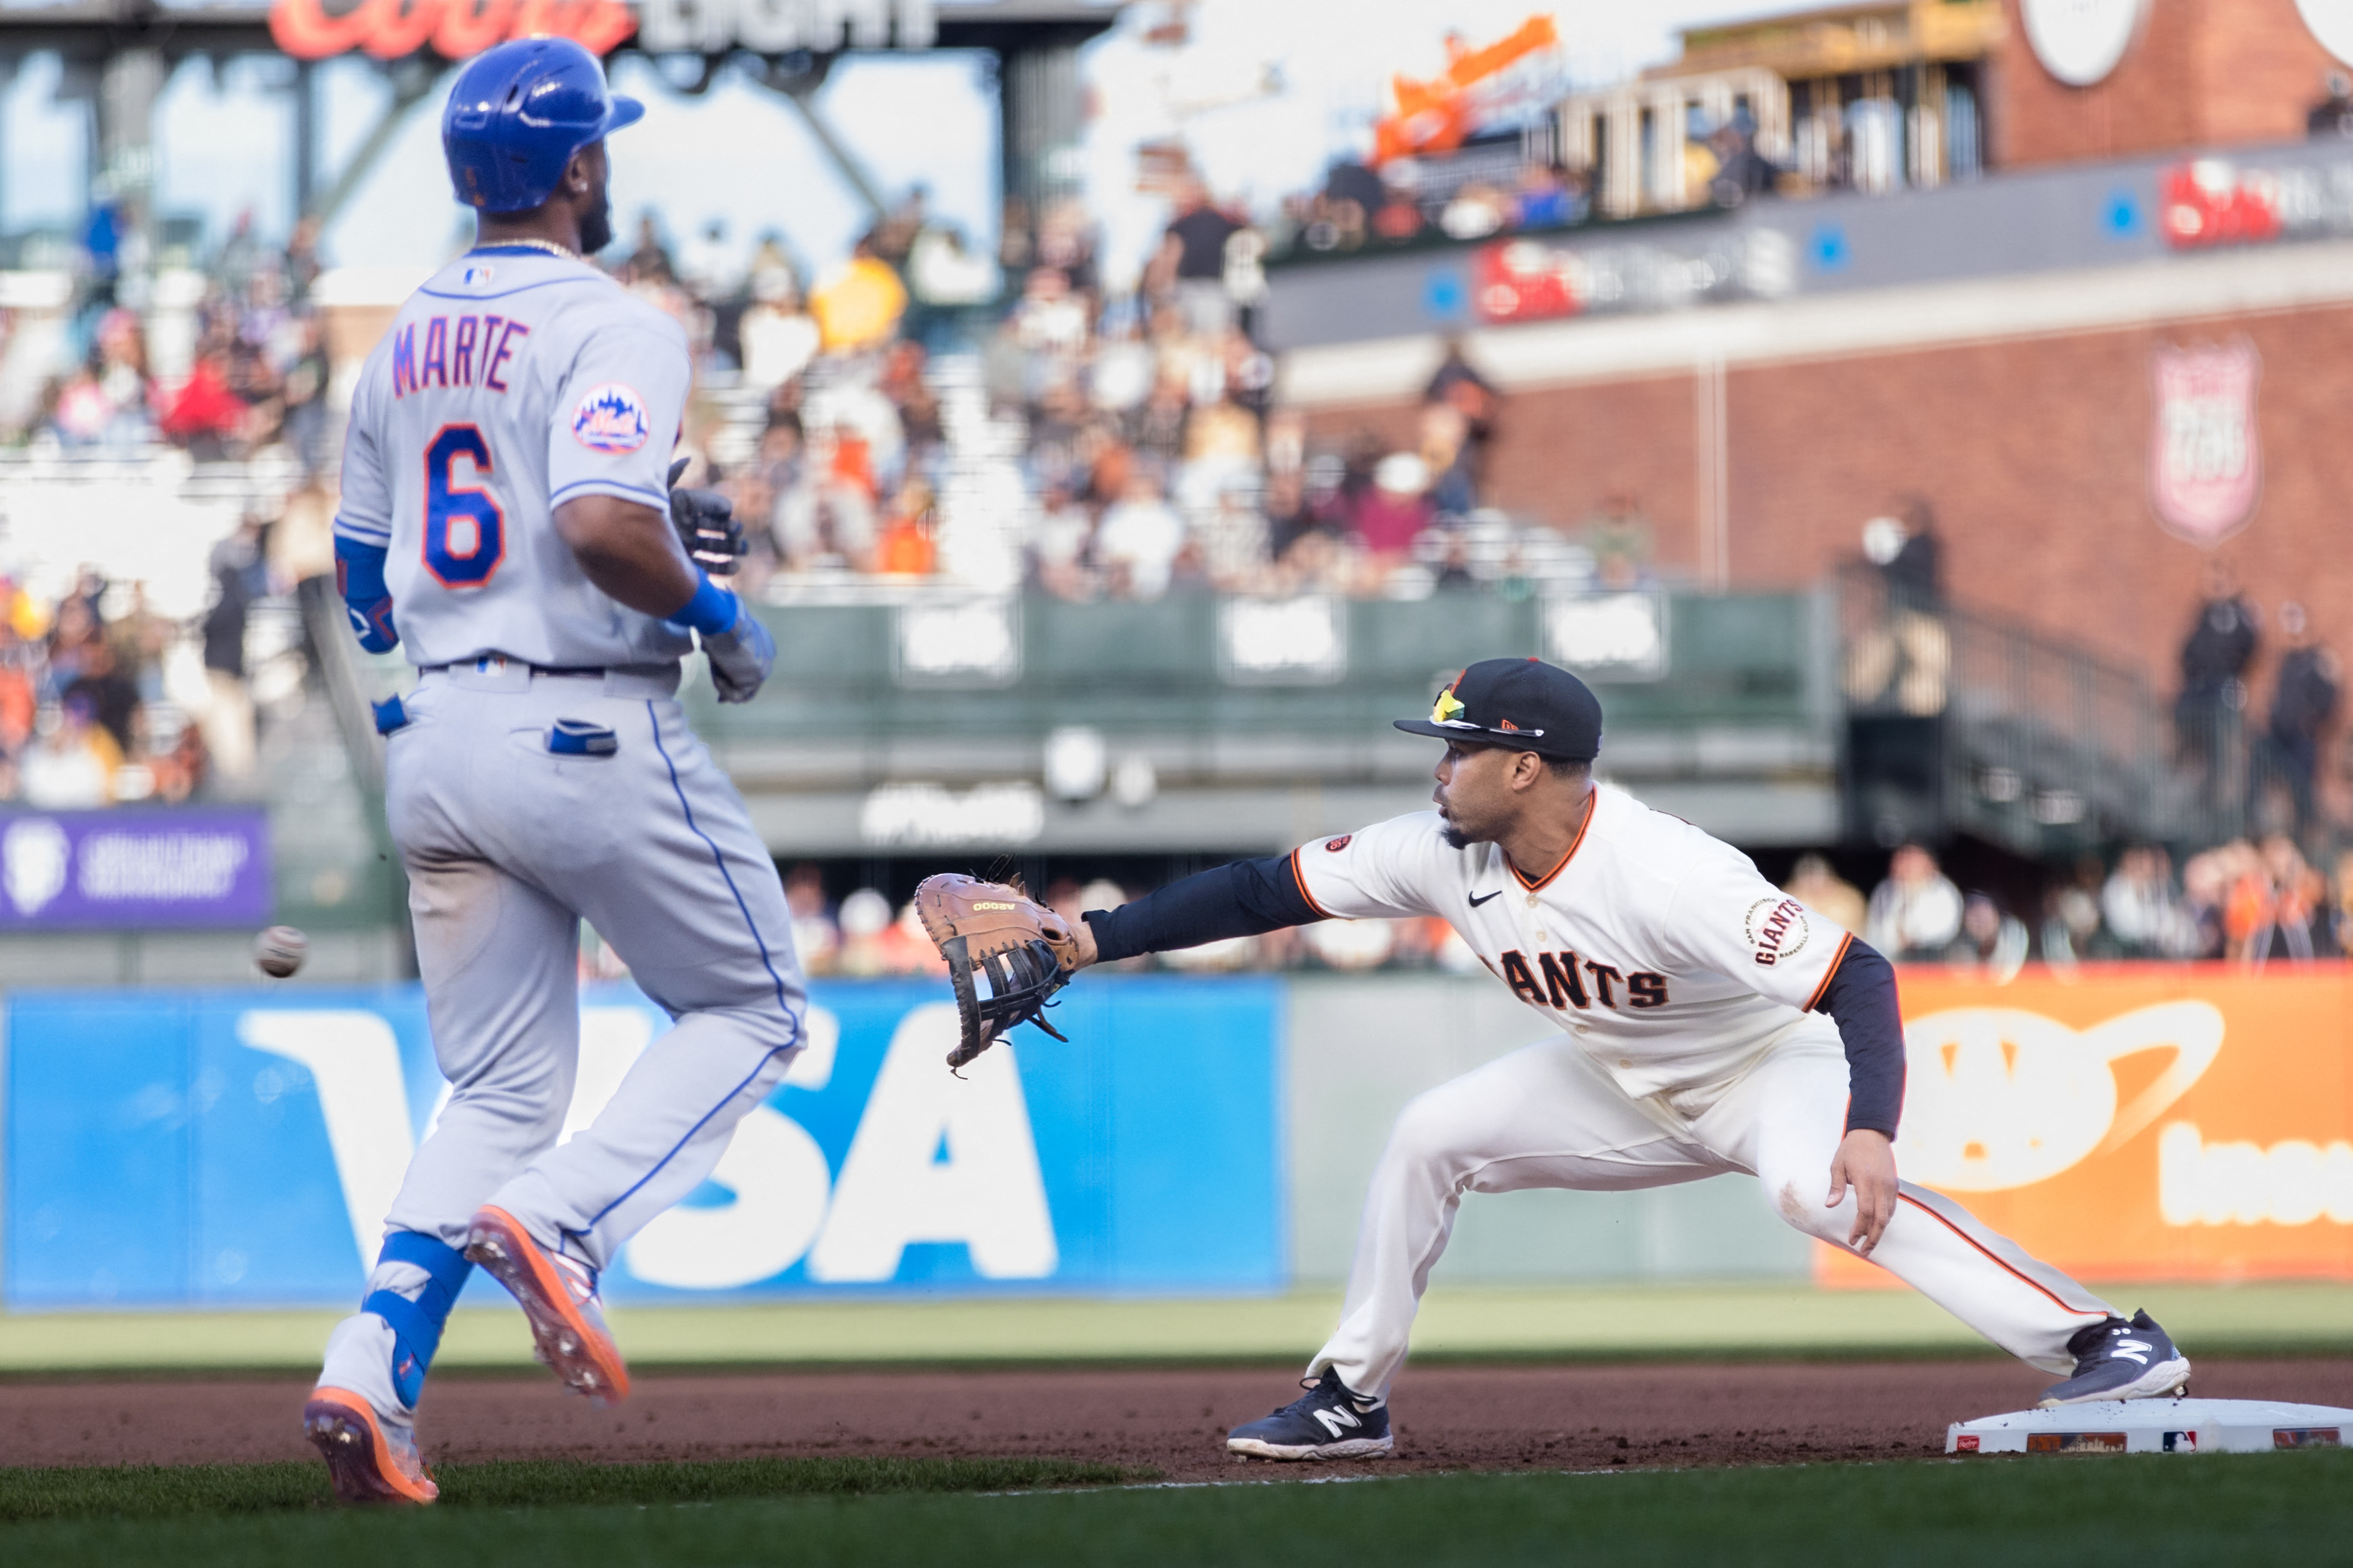 Pederson's career night helps SF Giants win instant classic vs. Mets